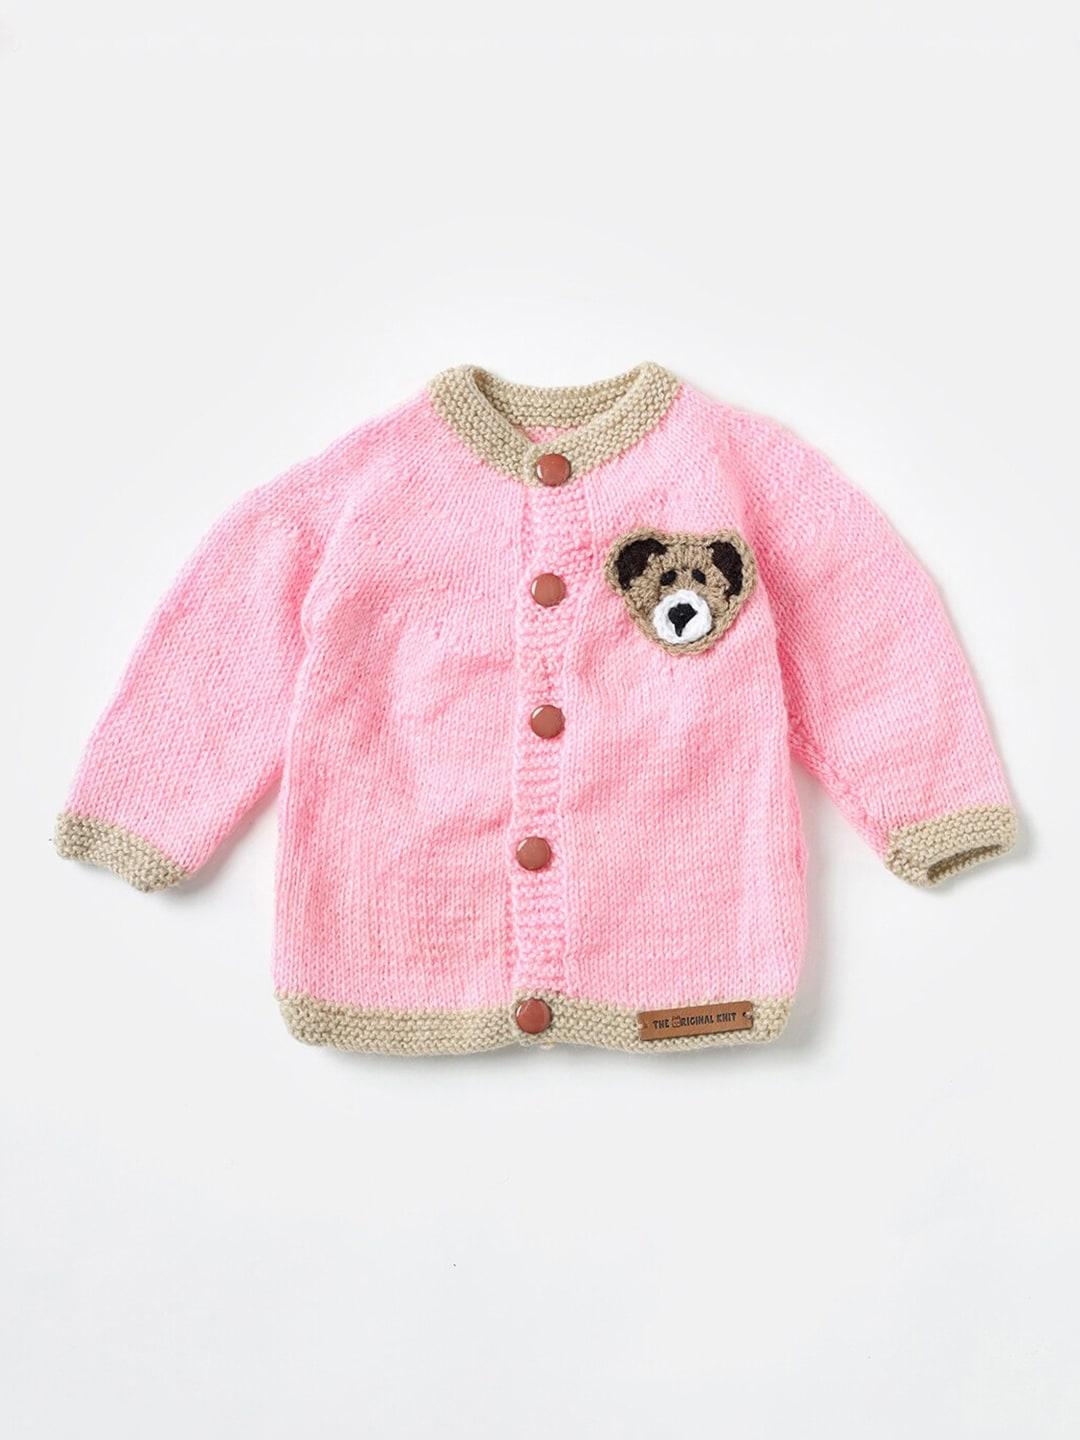 The Original Knit Infant Kids Cardigan Sweater